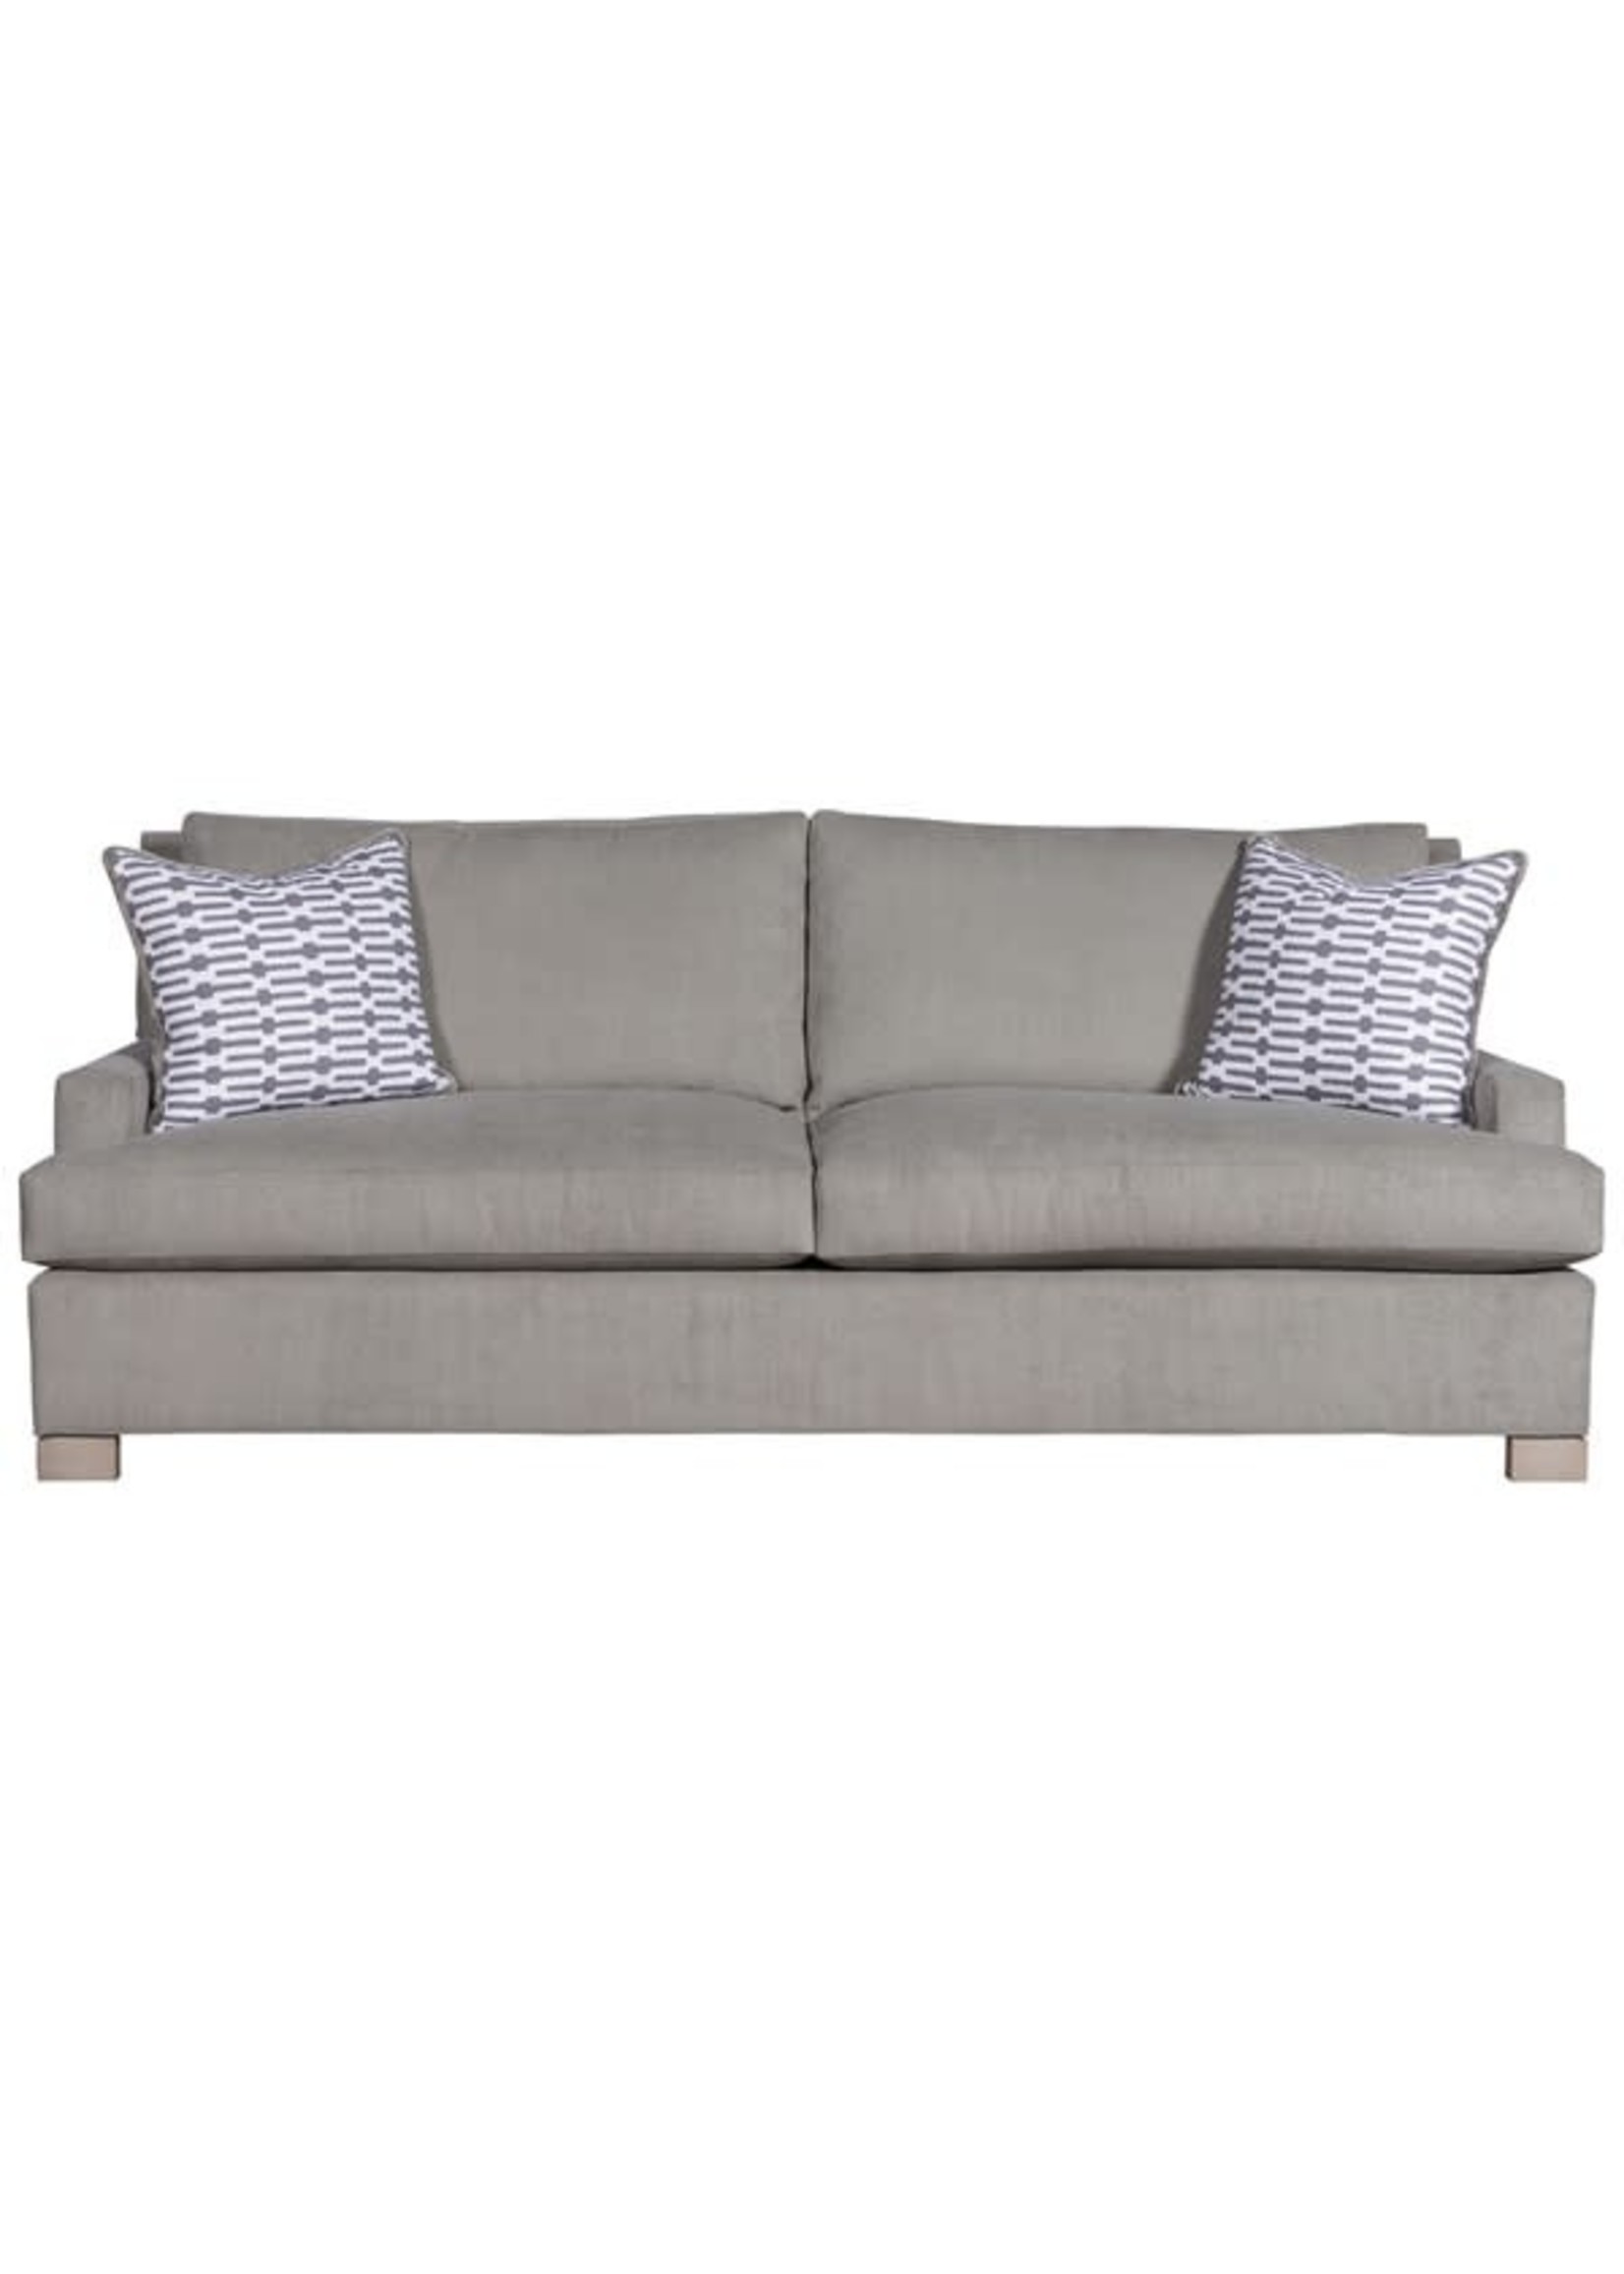 Vanguard Vanguard Henley 2 Cushion Ideal Linen Sofa